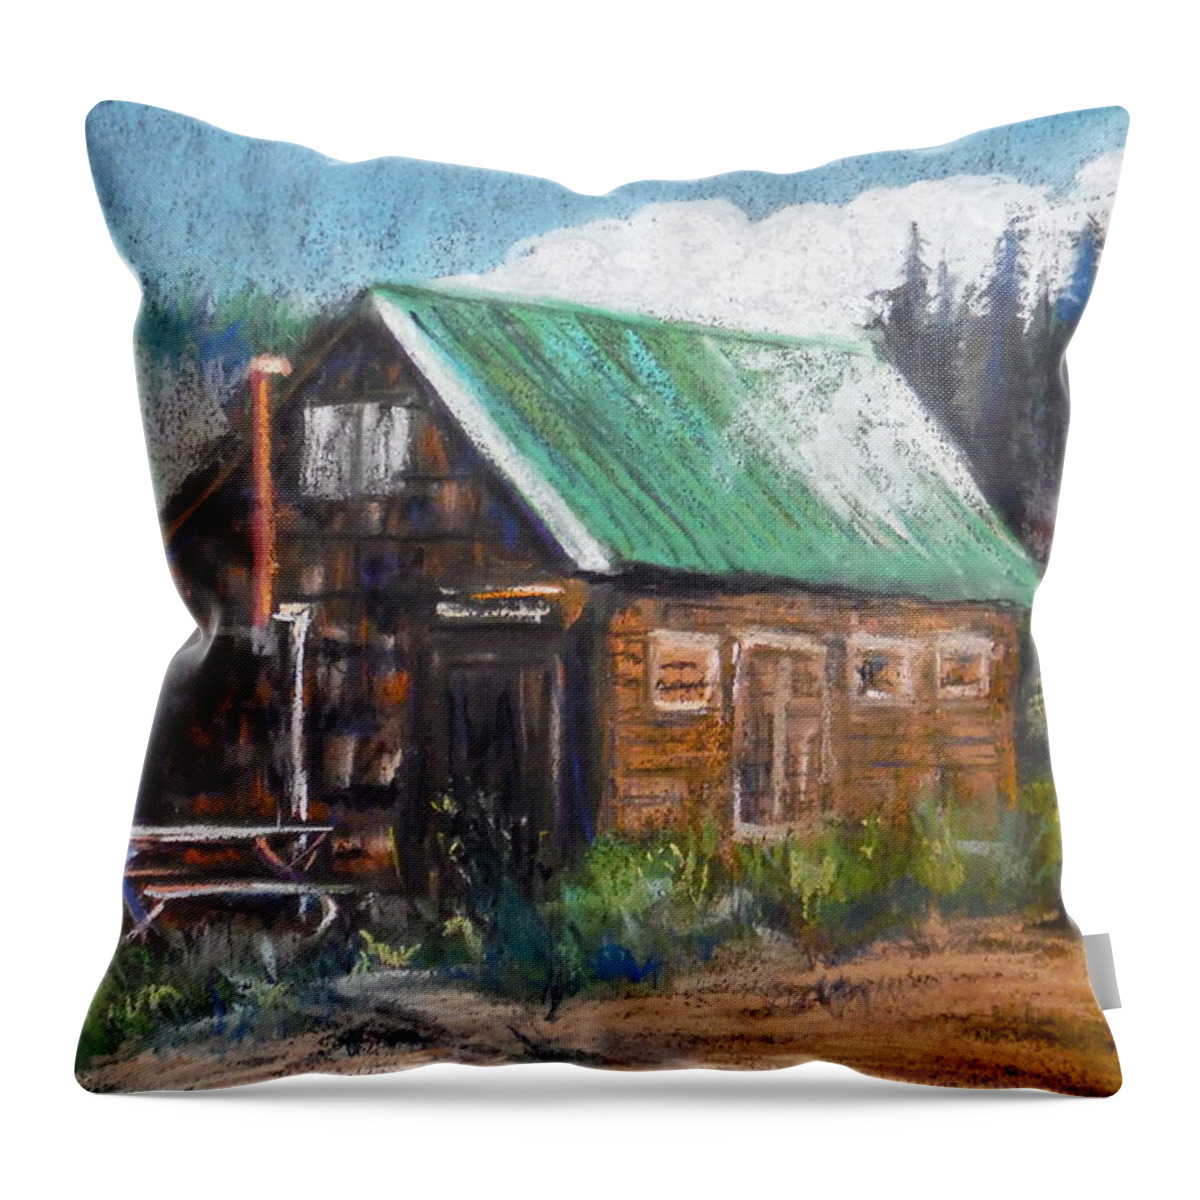 Jones Store Cabin Throw Pillow featuring the pastel Near Jones Store by Sandra Lee Scott